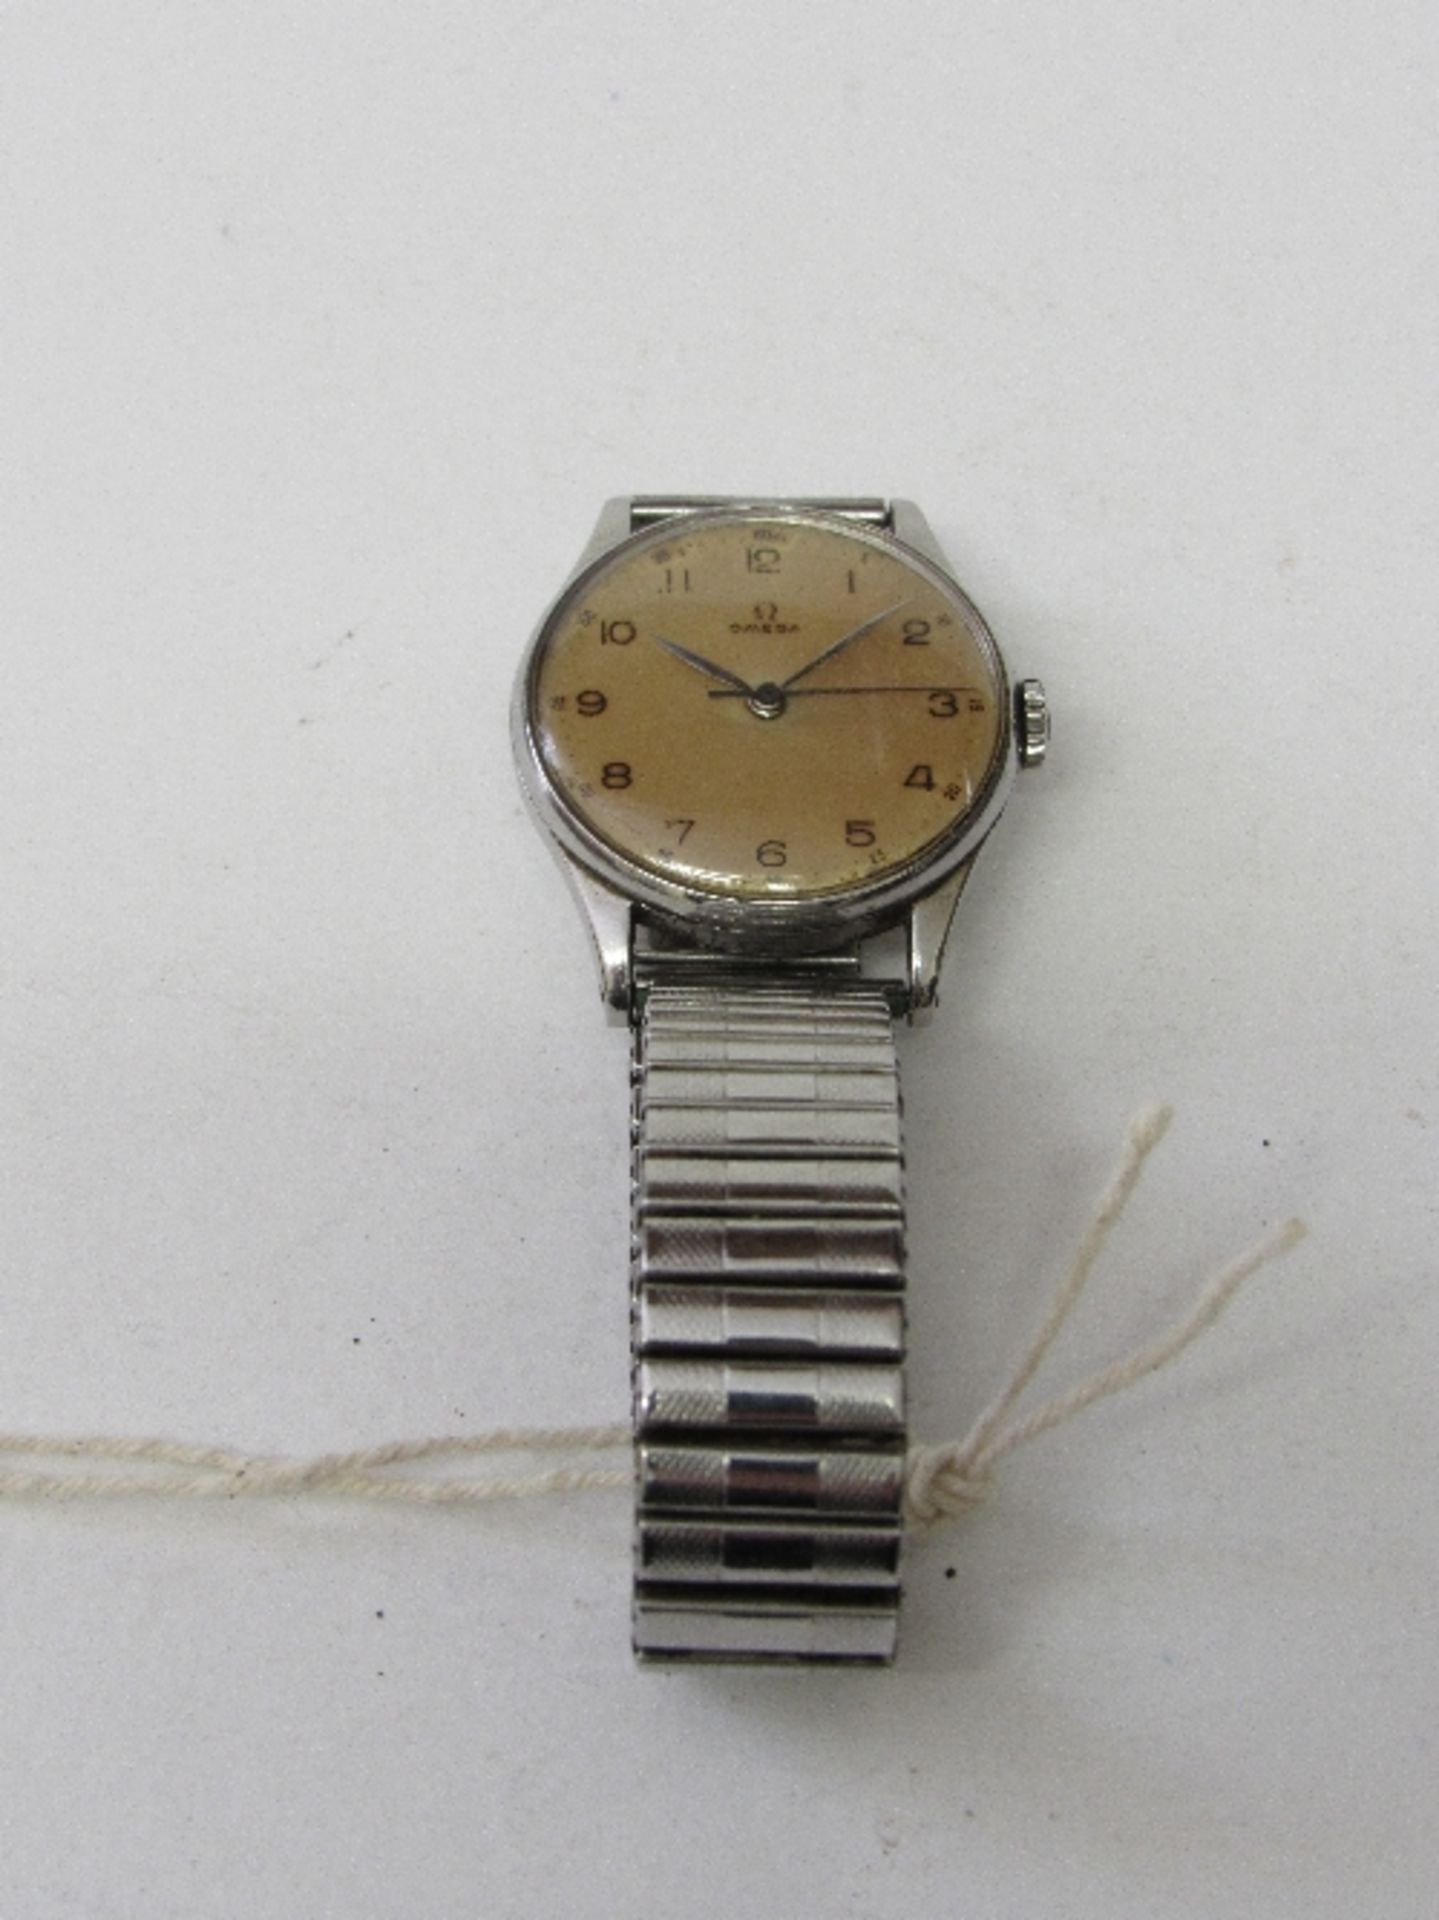 Omega men's automatic wristwatch. Estimate £30-40.